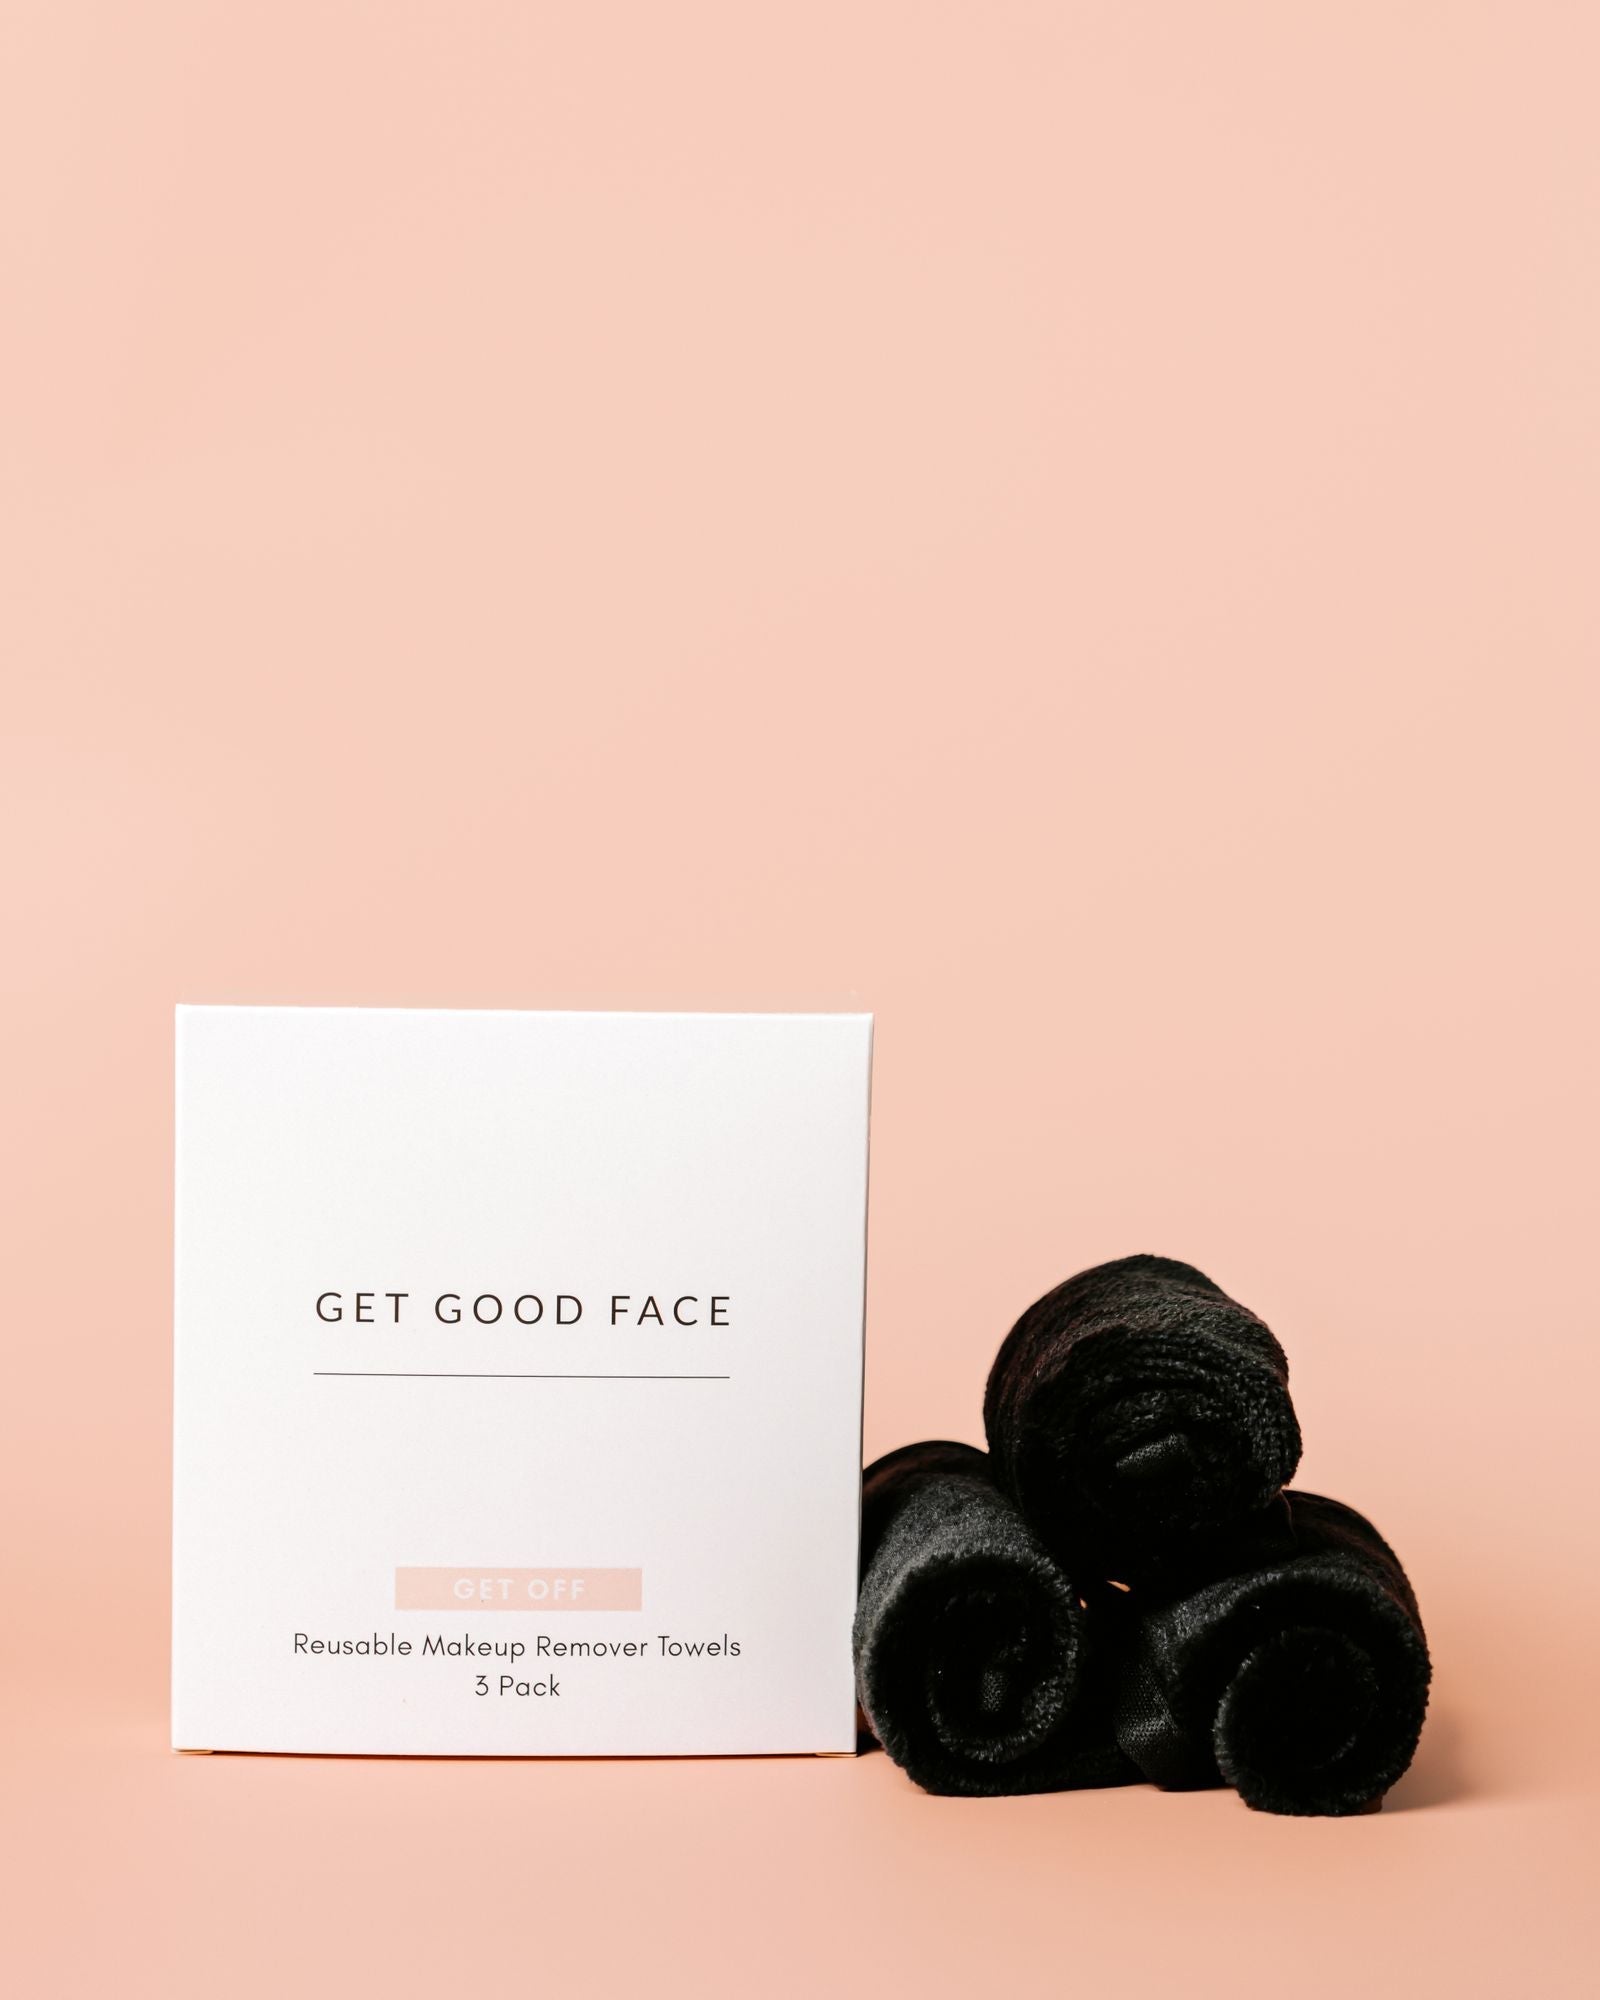 Get Off - Makeup Remover Towels - Get Good Face